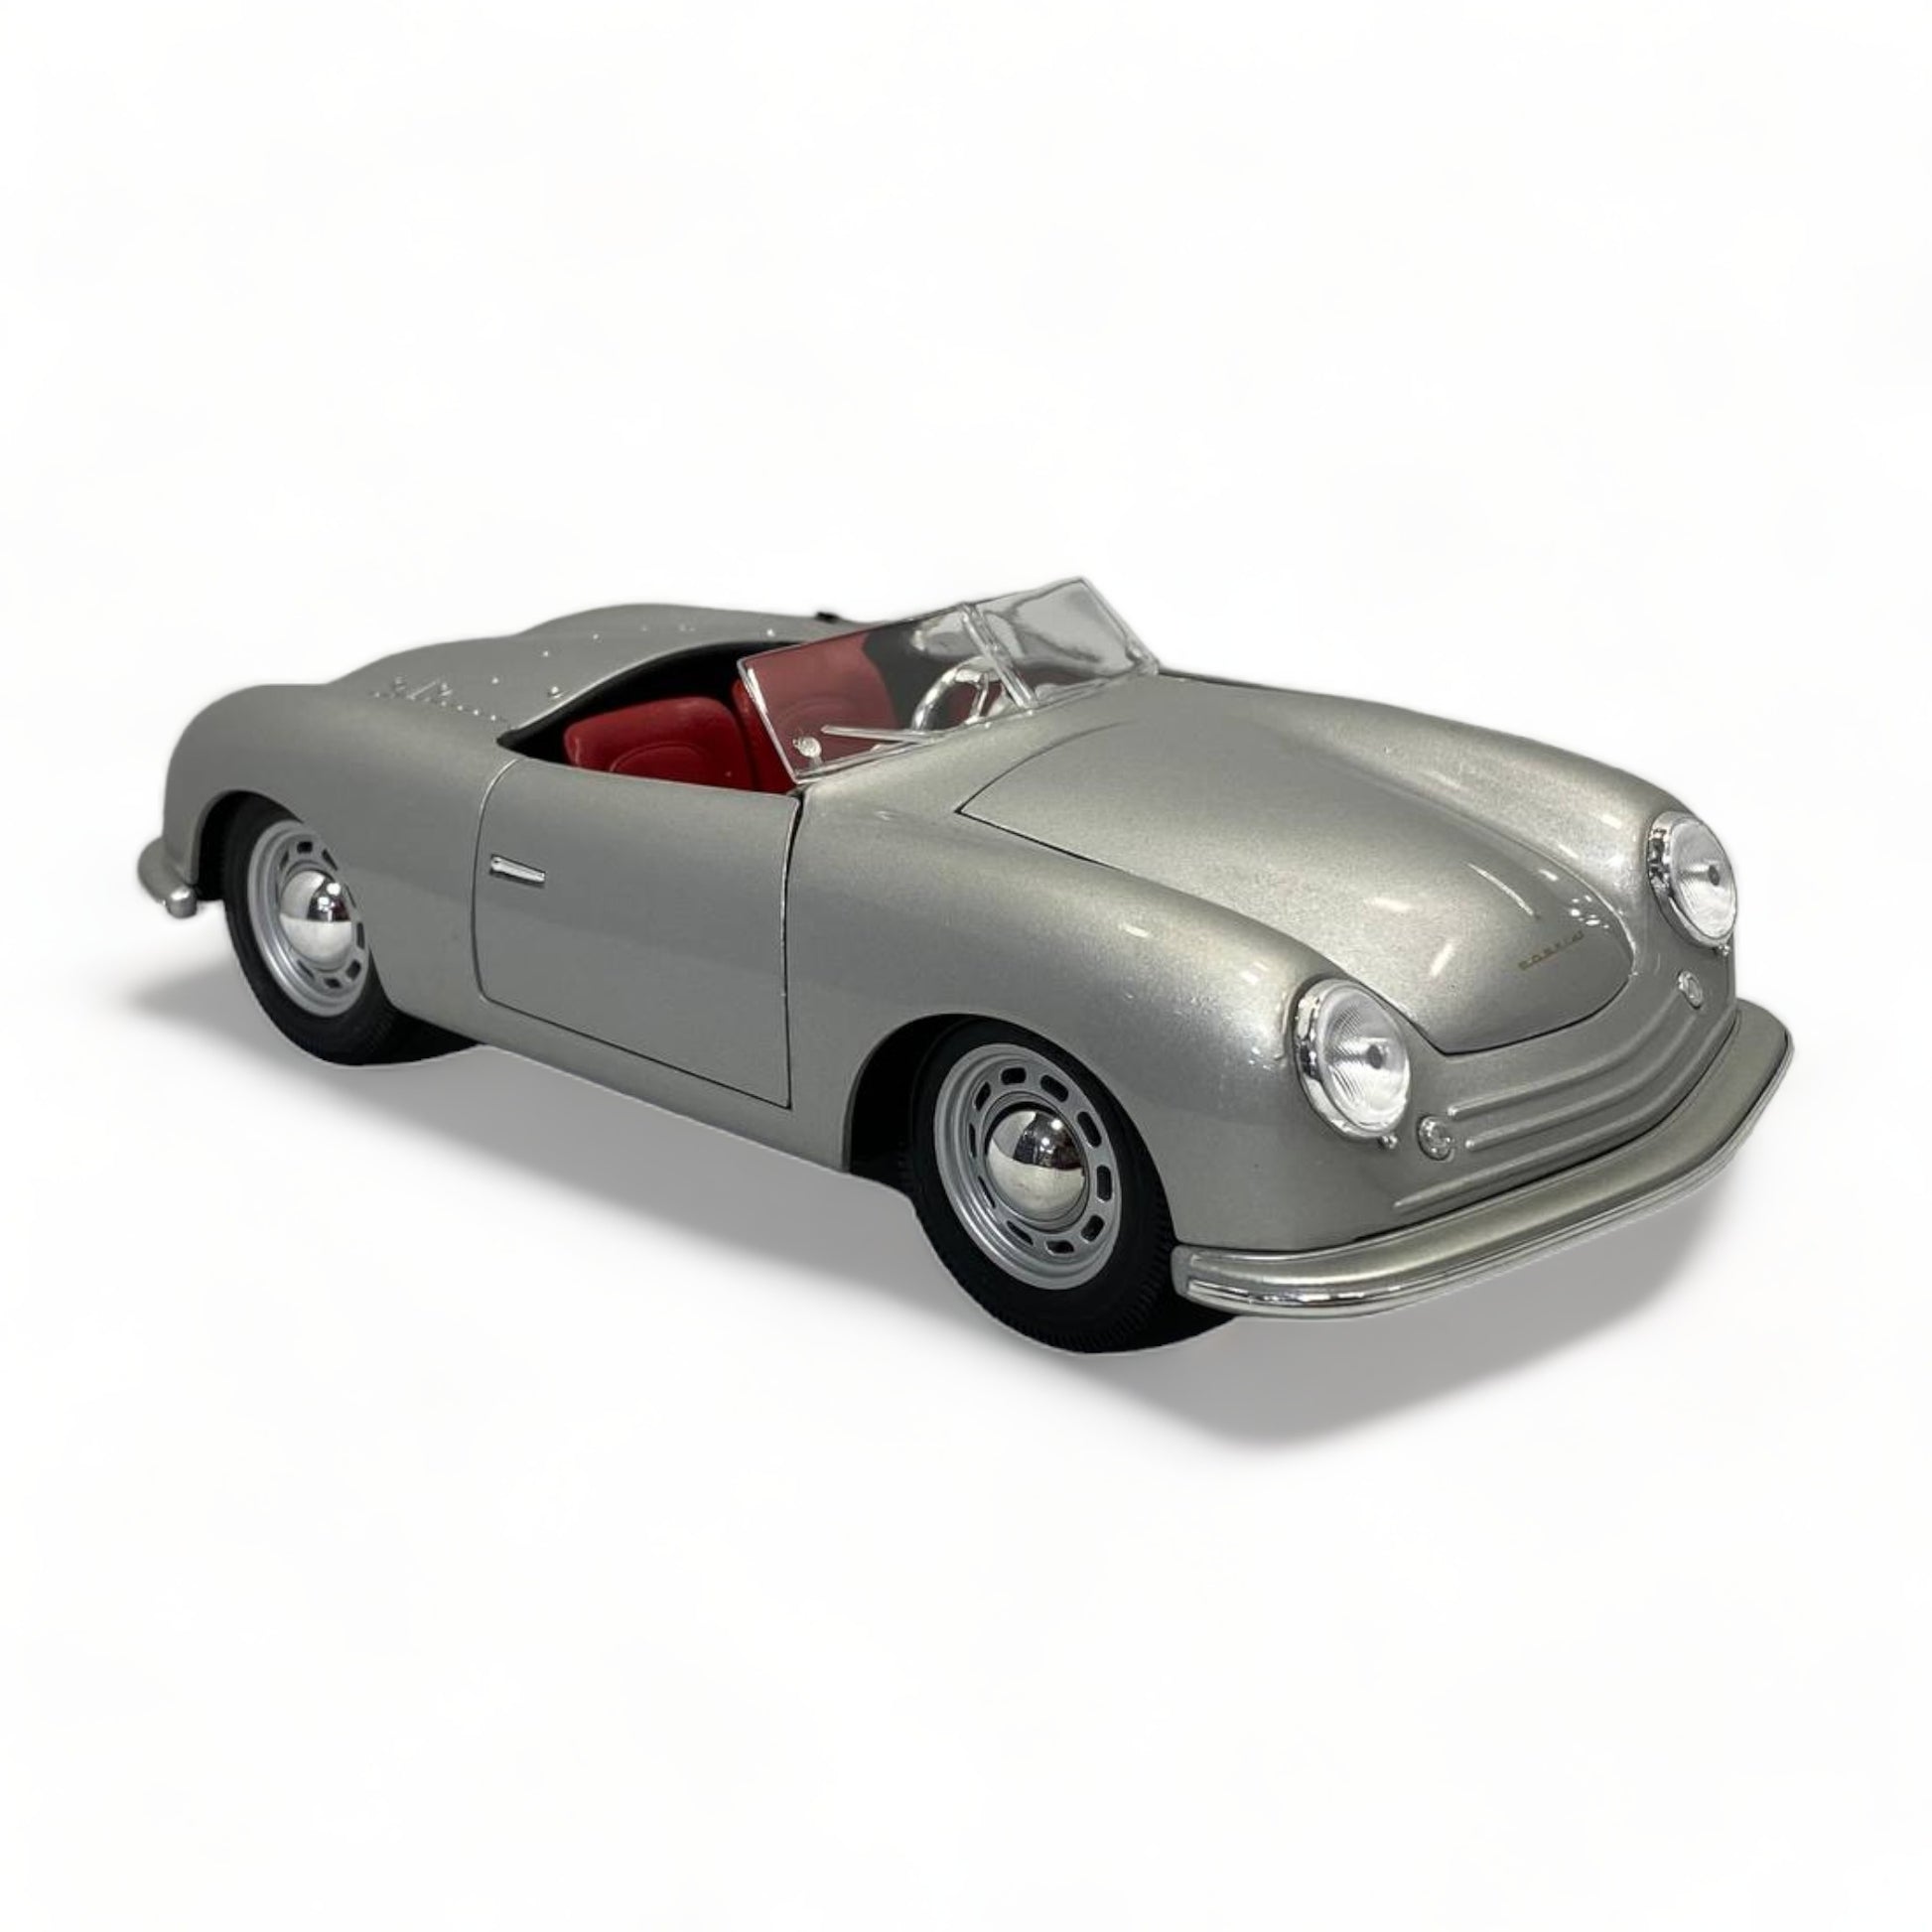 1/18 Diecast Maisto Porsche NO. 1 TYP 356 ROADSTER SILVER 1948 Scale Model Car|Sold in Dturman.com Dubai UAE.